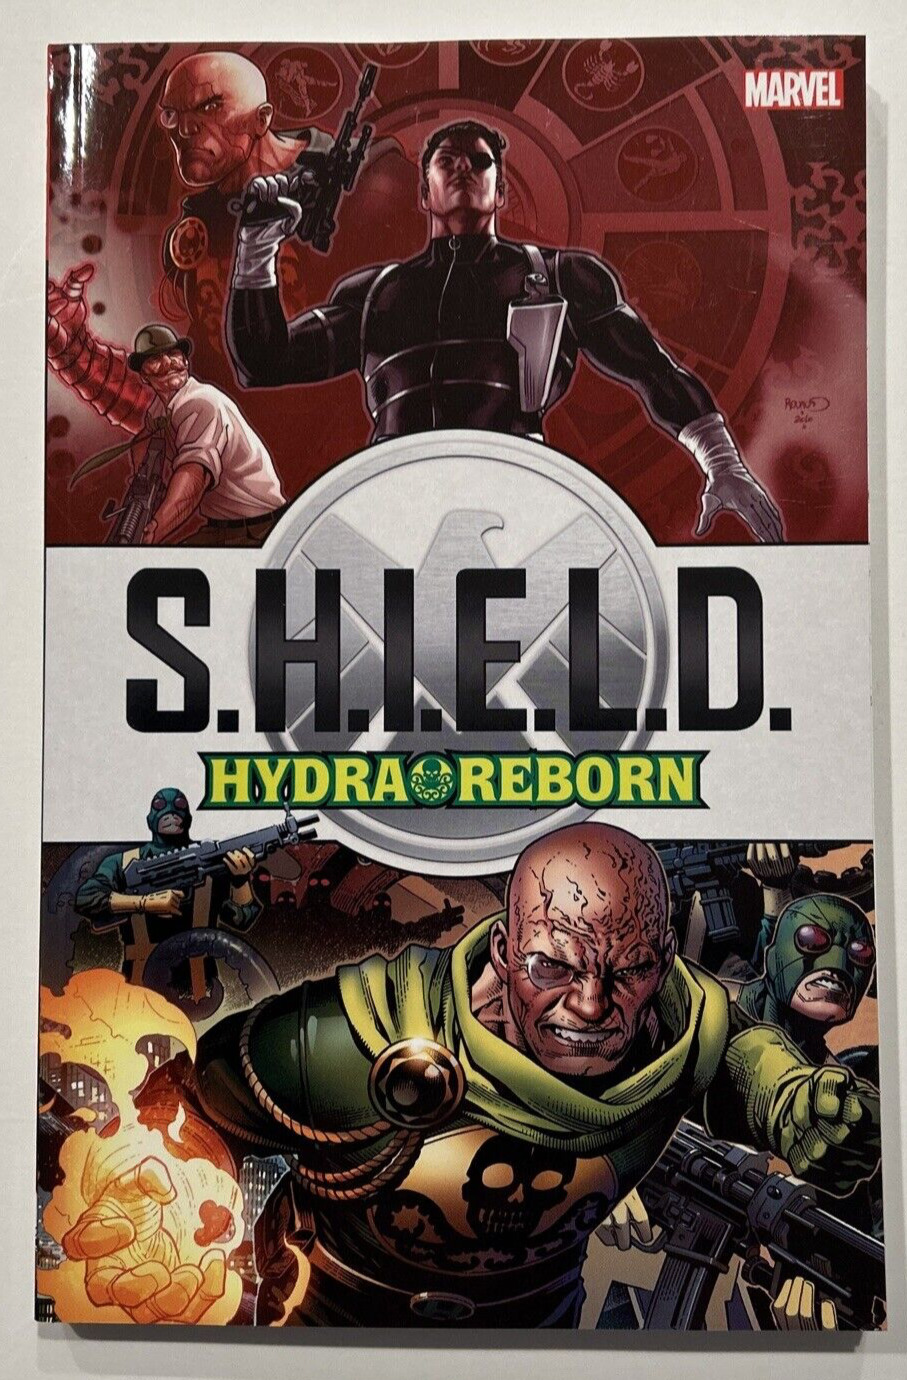 S.H.I.E.L.D. Hydra Reborn, SHARP, ROBERT, BROWN, ELIOT R, LOBDELL, SCOTT, EXCELL